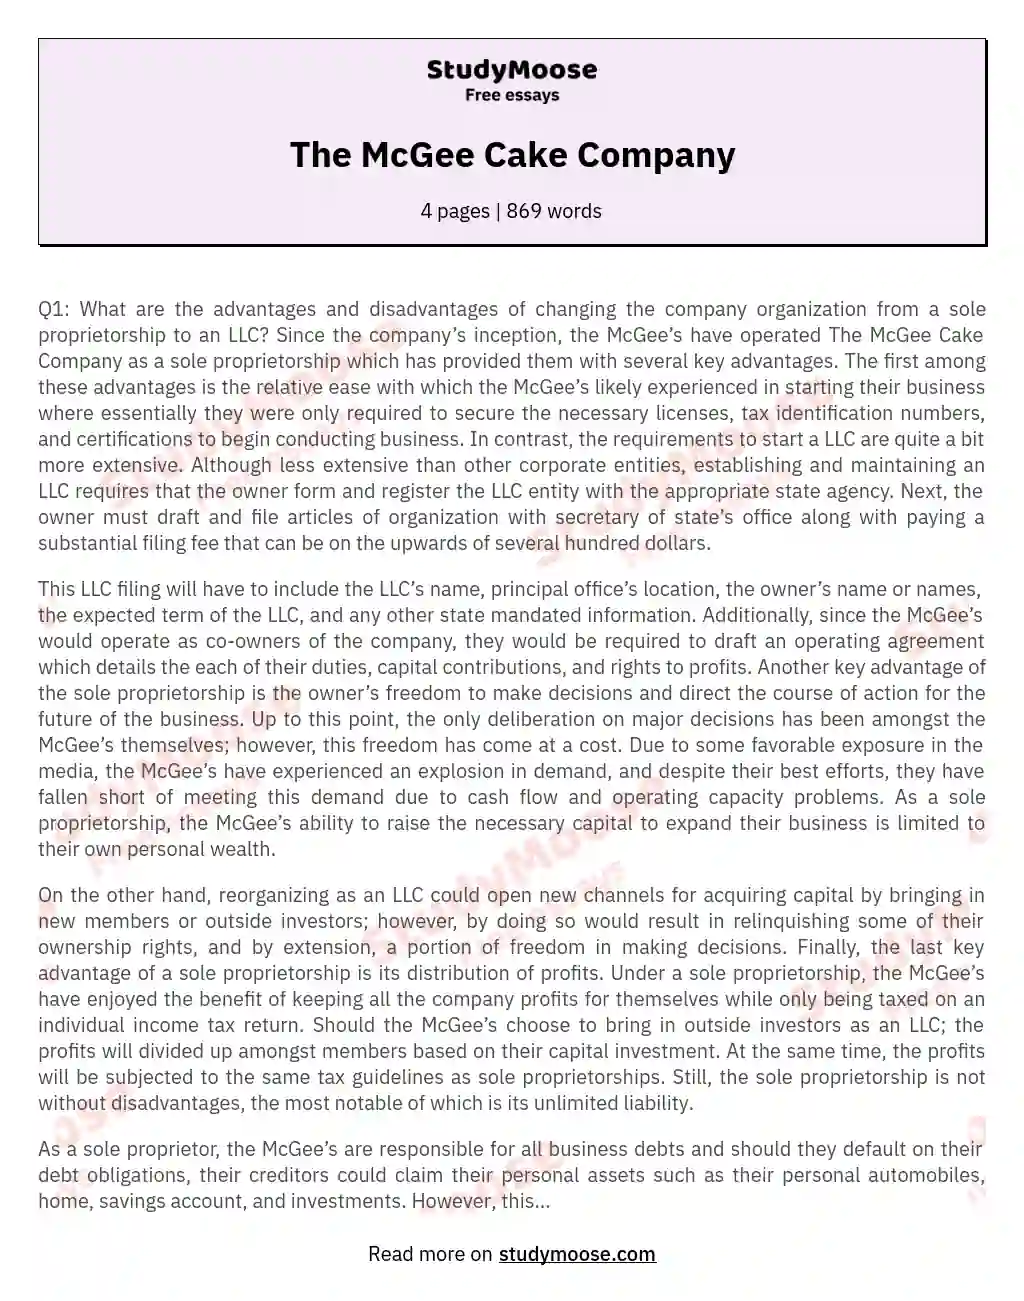 The McGee Cake Company essay